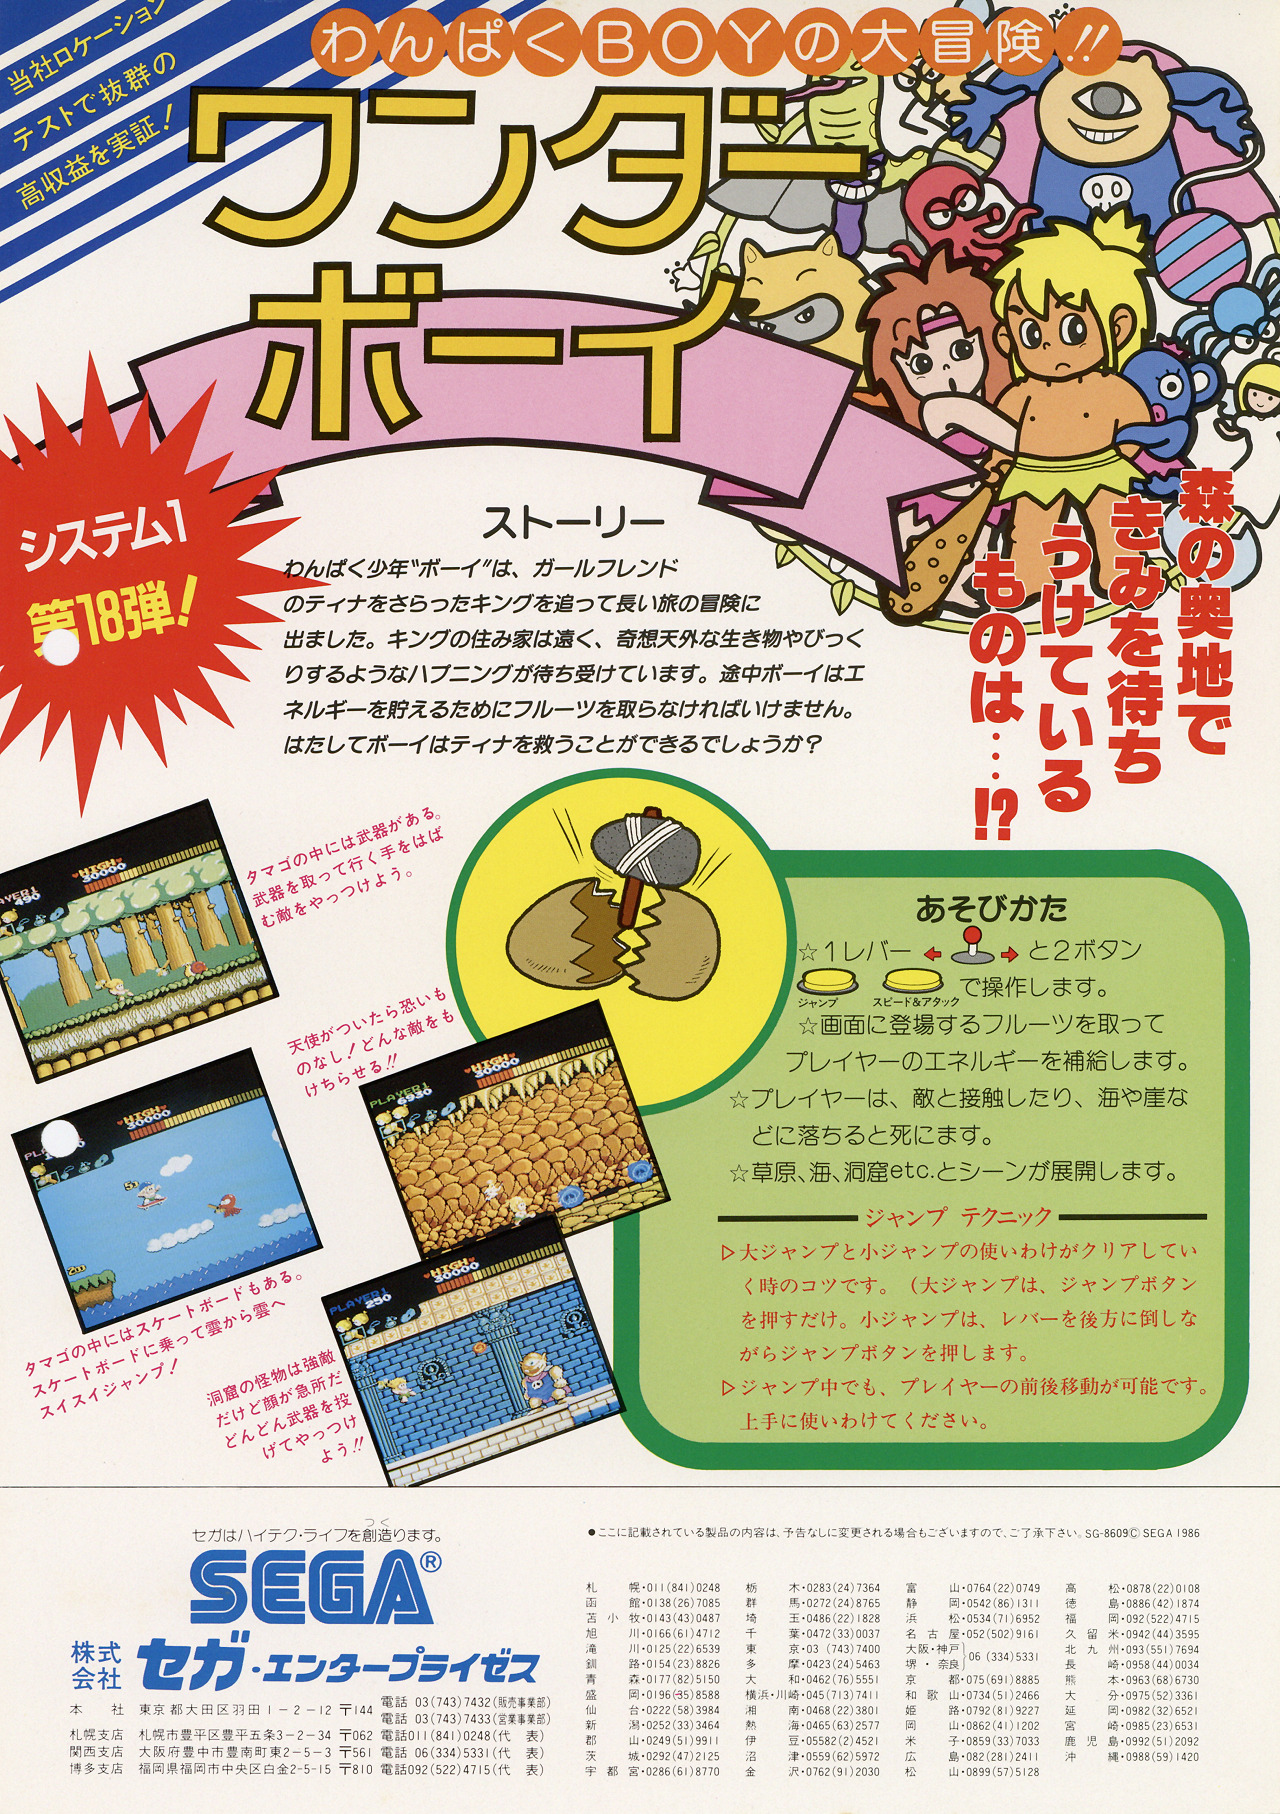 Wonder Boy Arcade JP Flyer.jpg